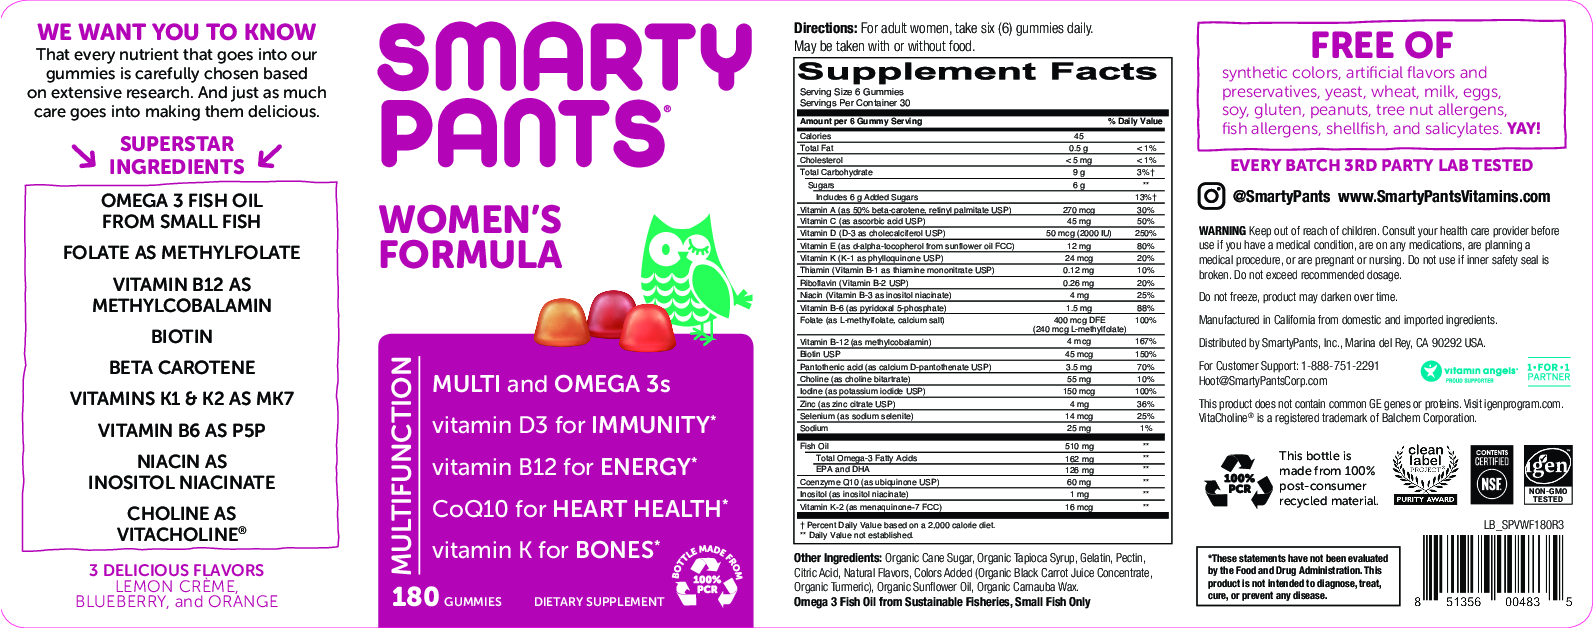 SmartyPants Vitamins Women's Formula 180 gummies